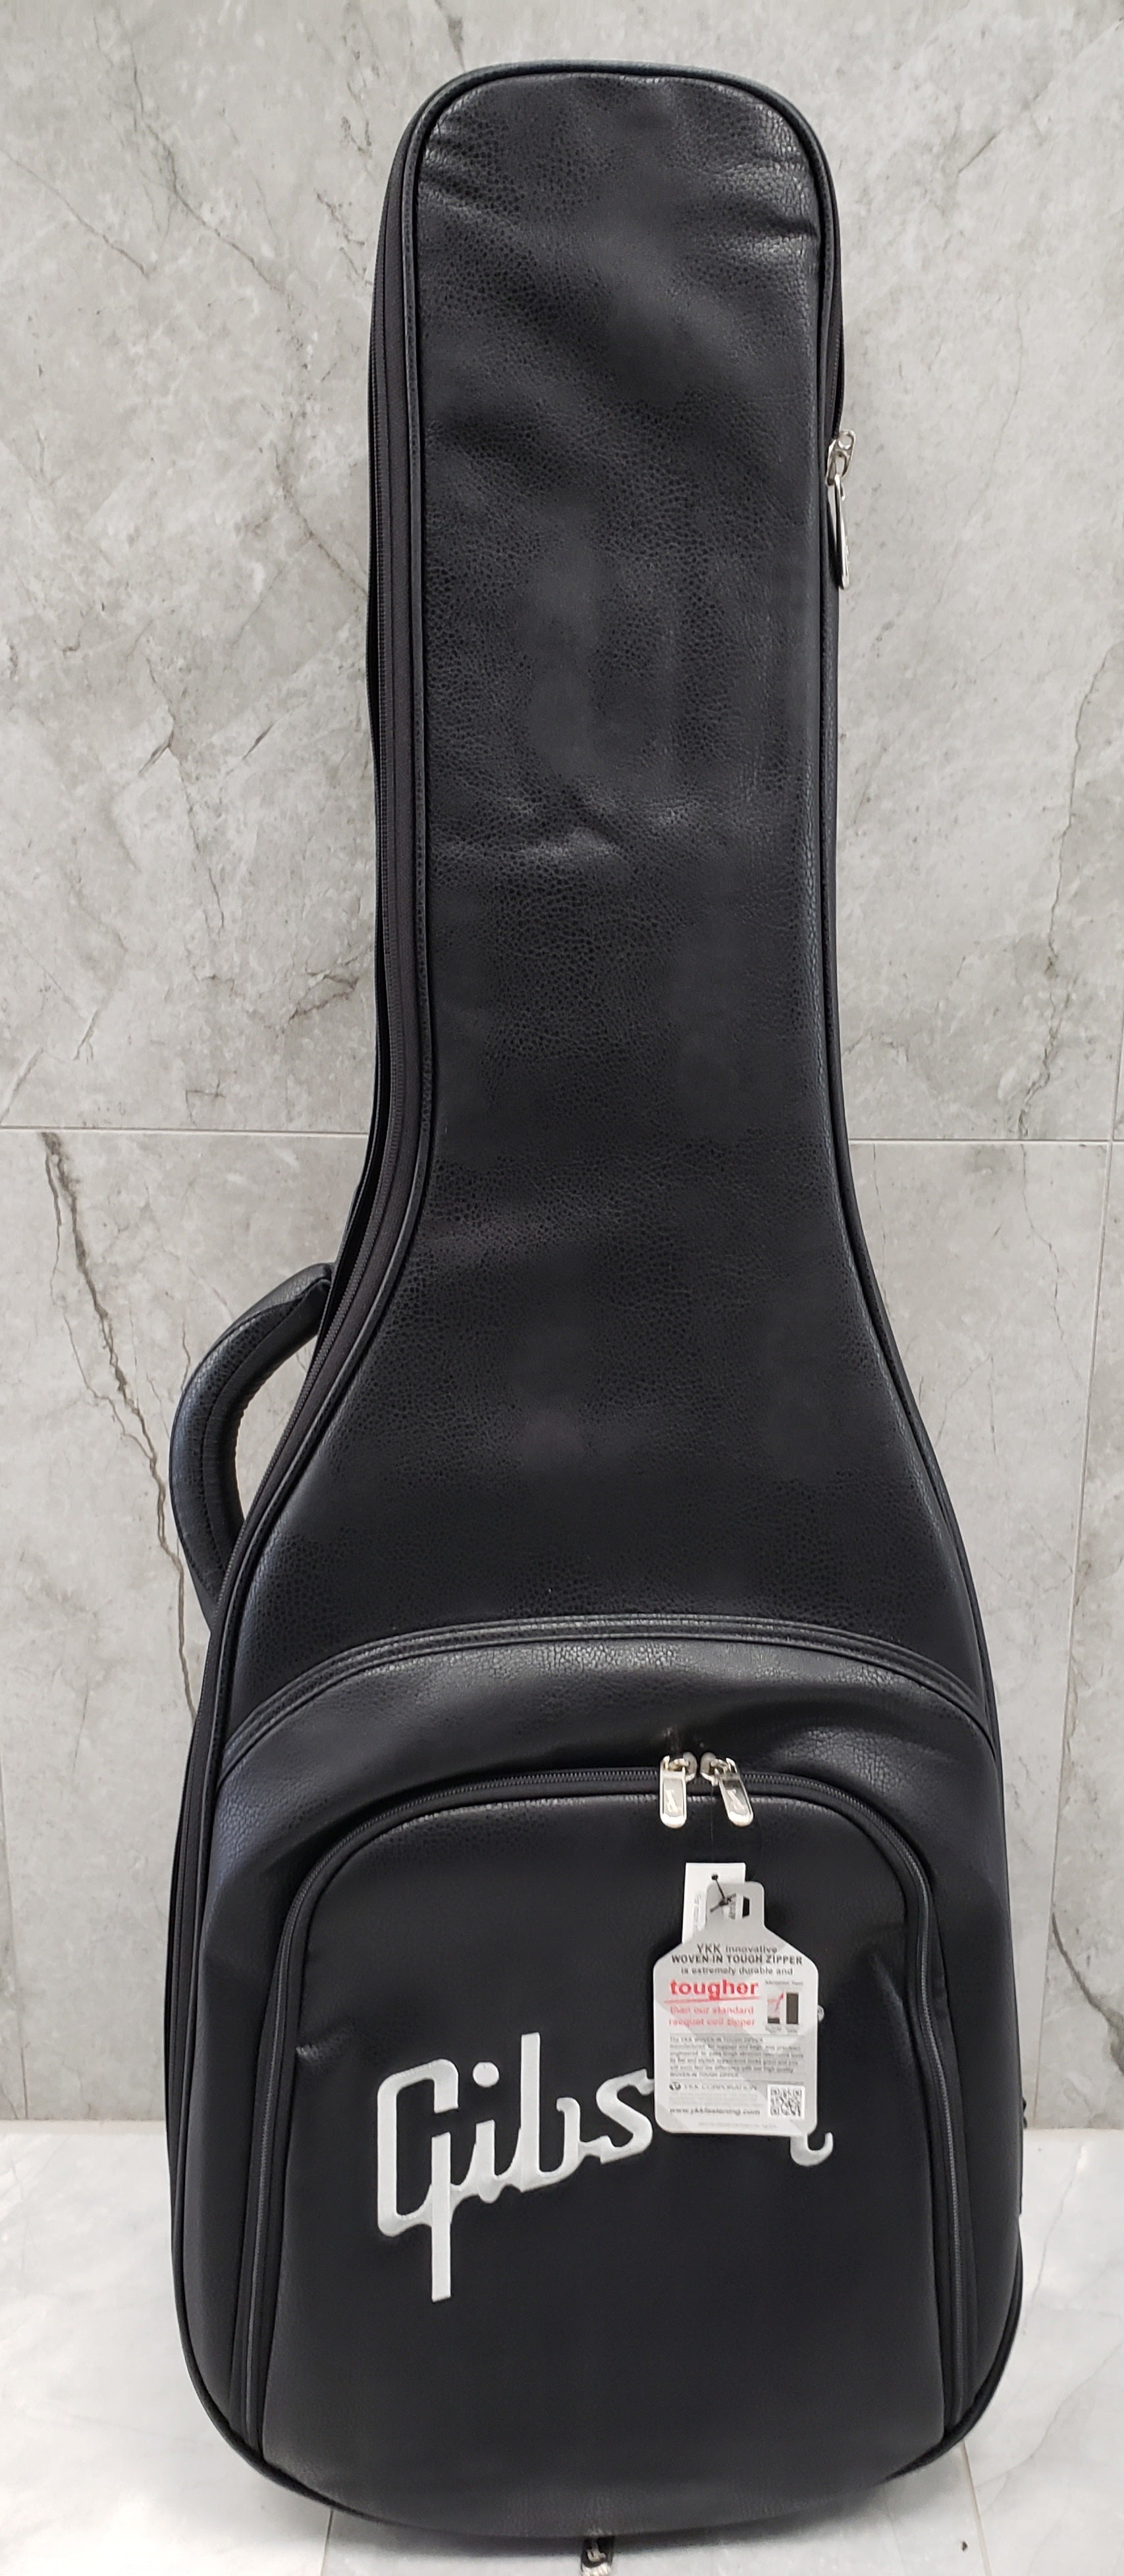 Gibson SG Standard Left Hand - Heritage Cherry SGS00HCCHLH